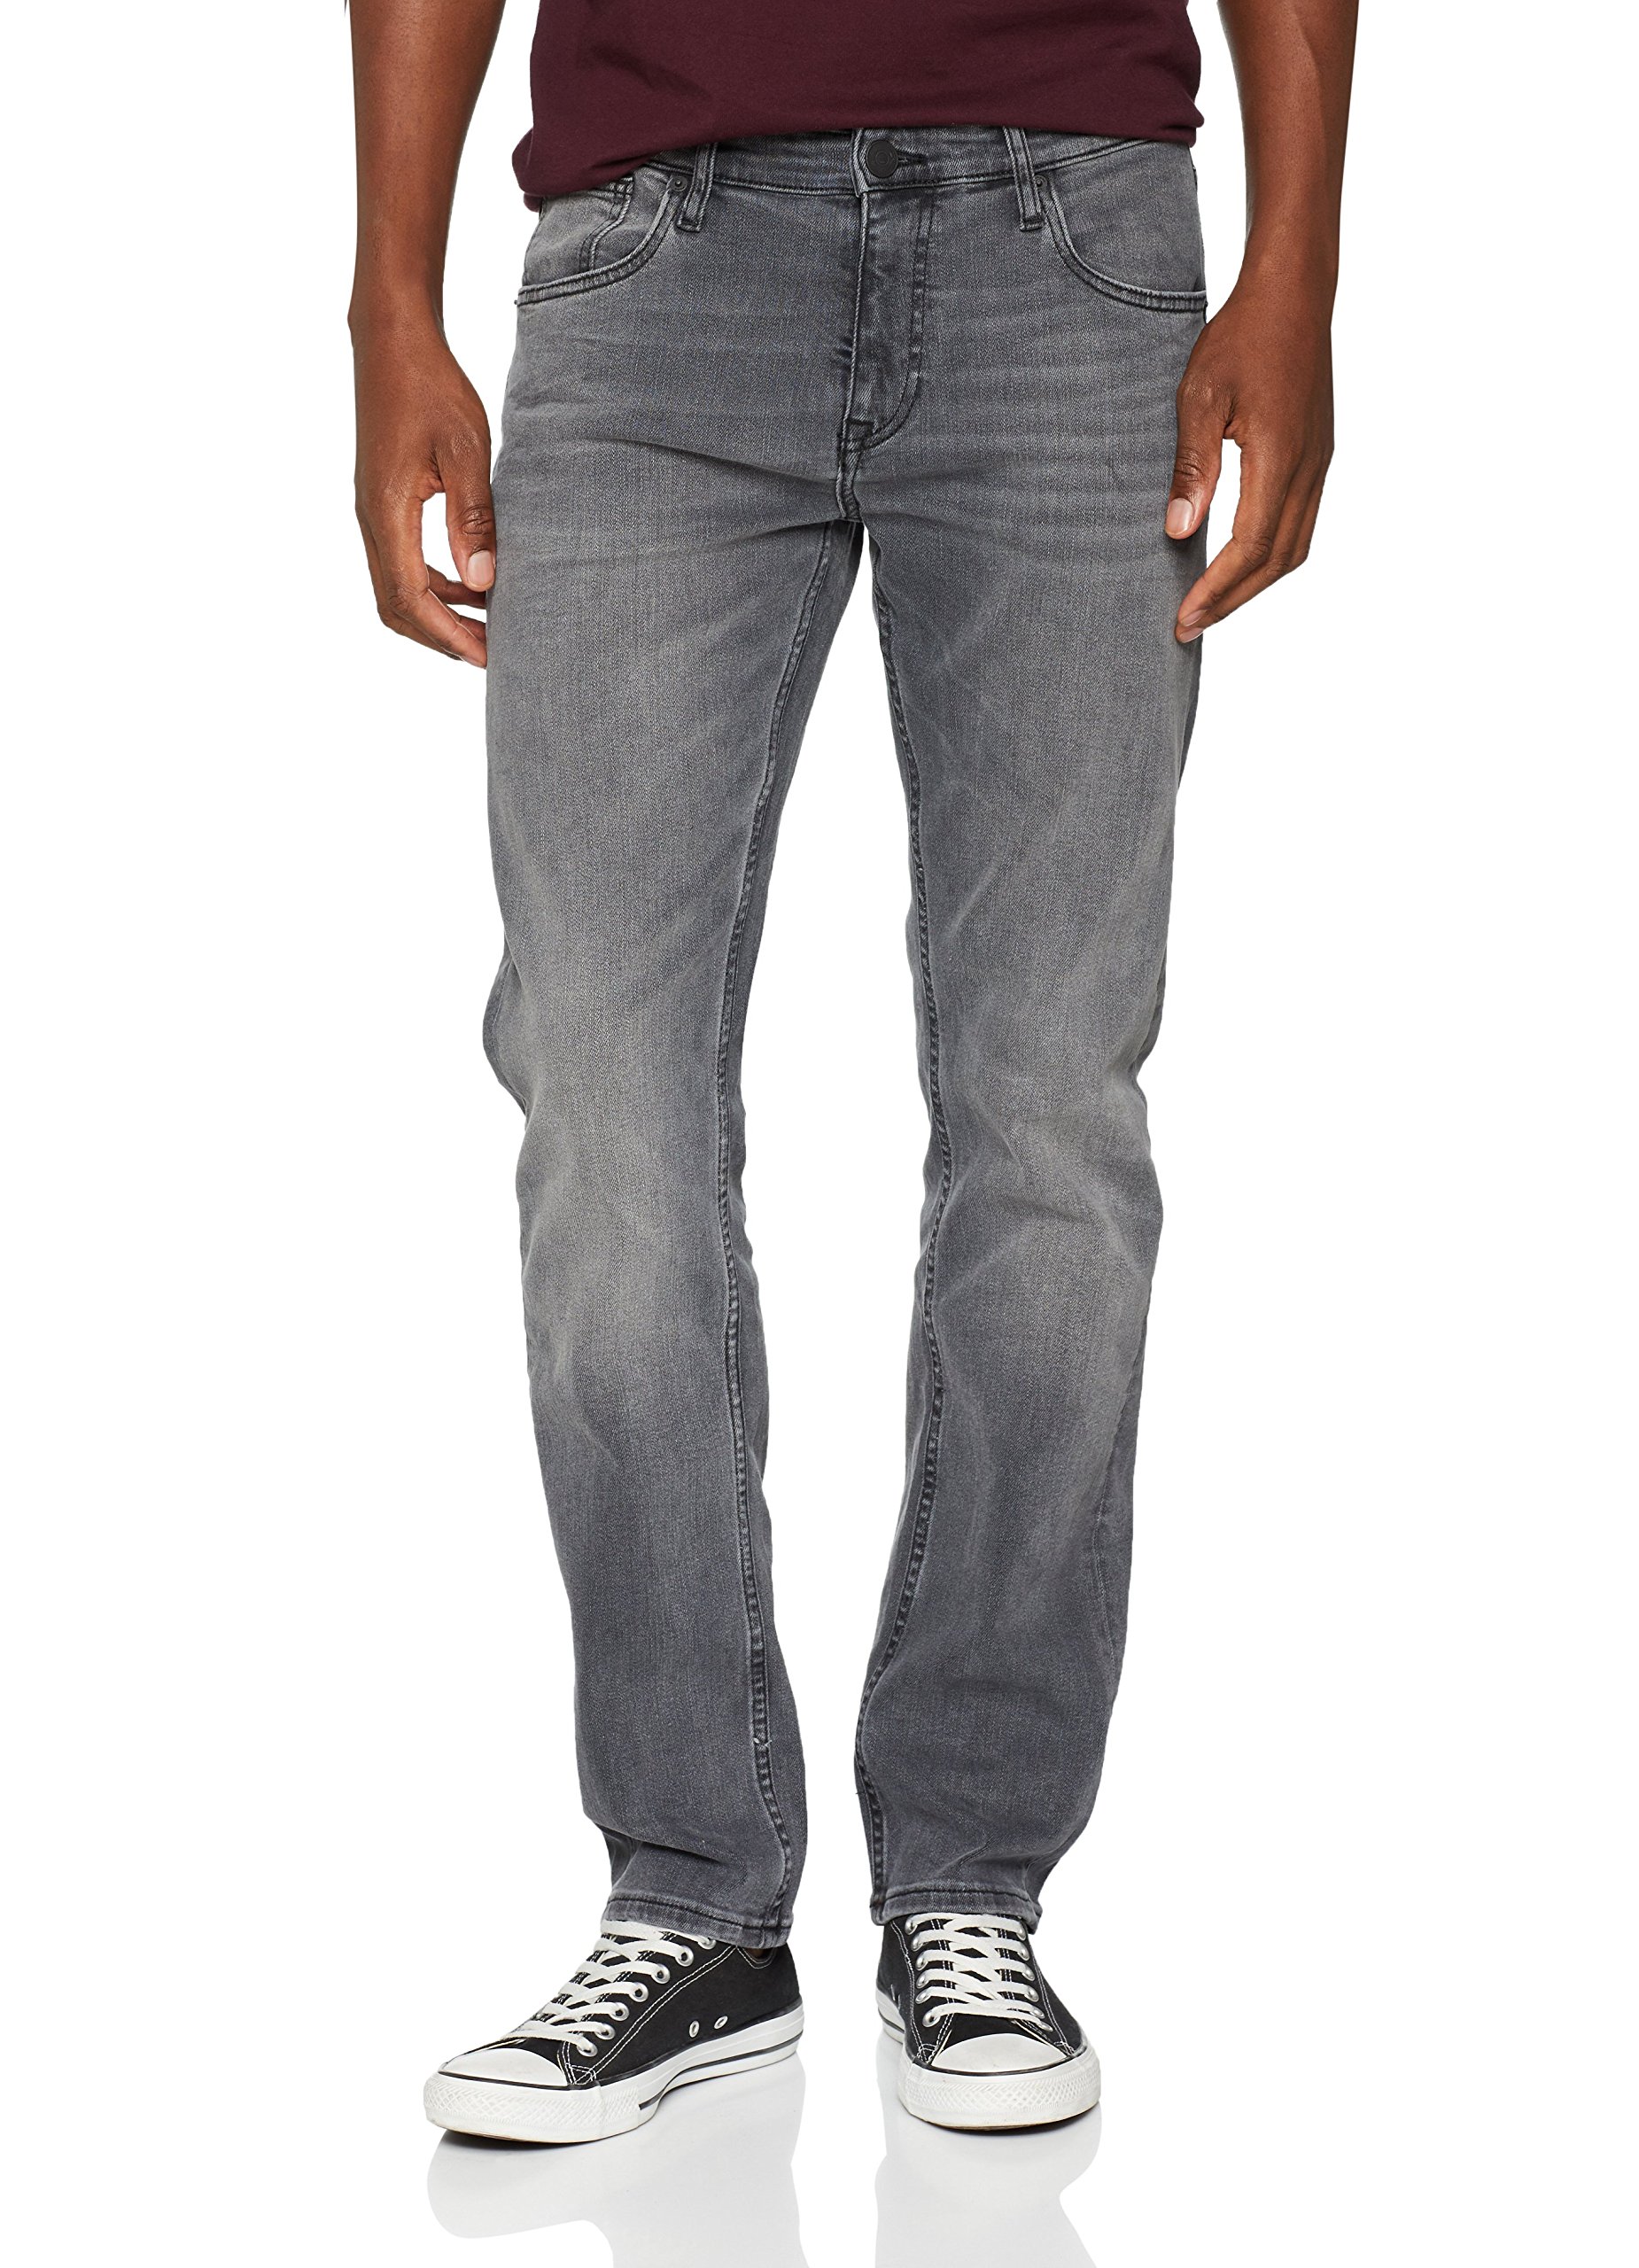 Cross Herren Damien Slim Jeans, Grau (Grey Used 010), 36W / 38L EU